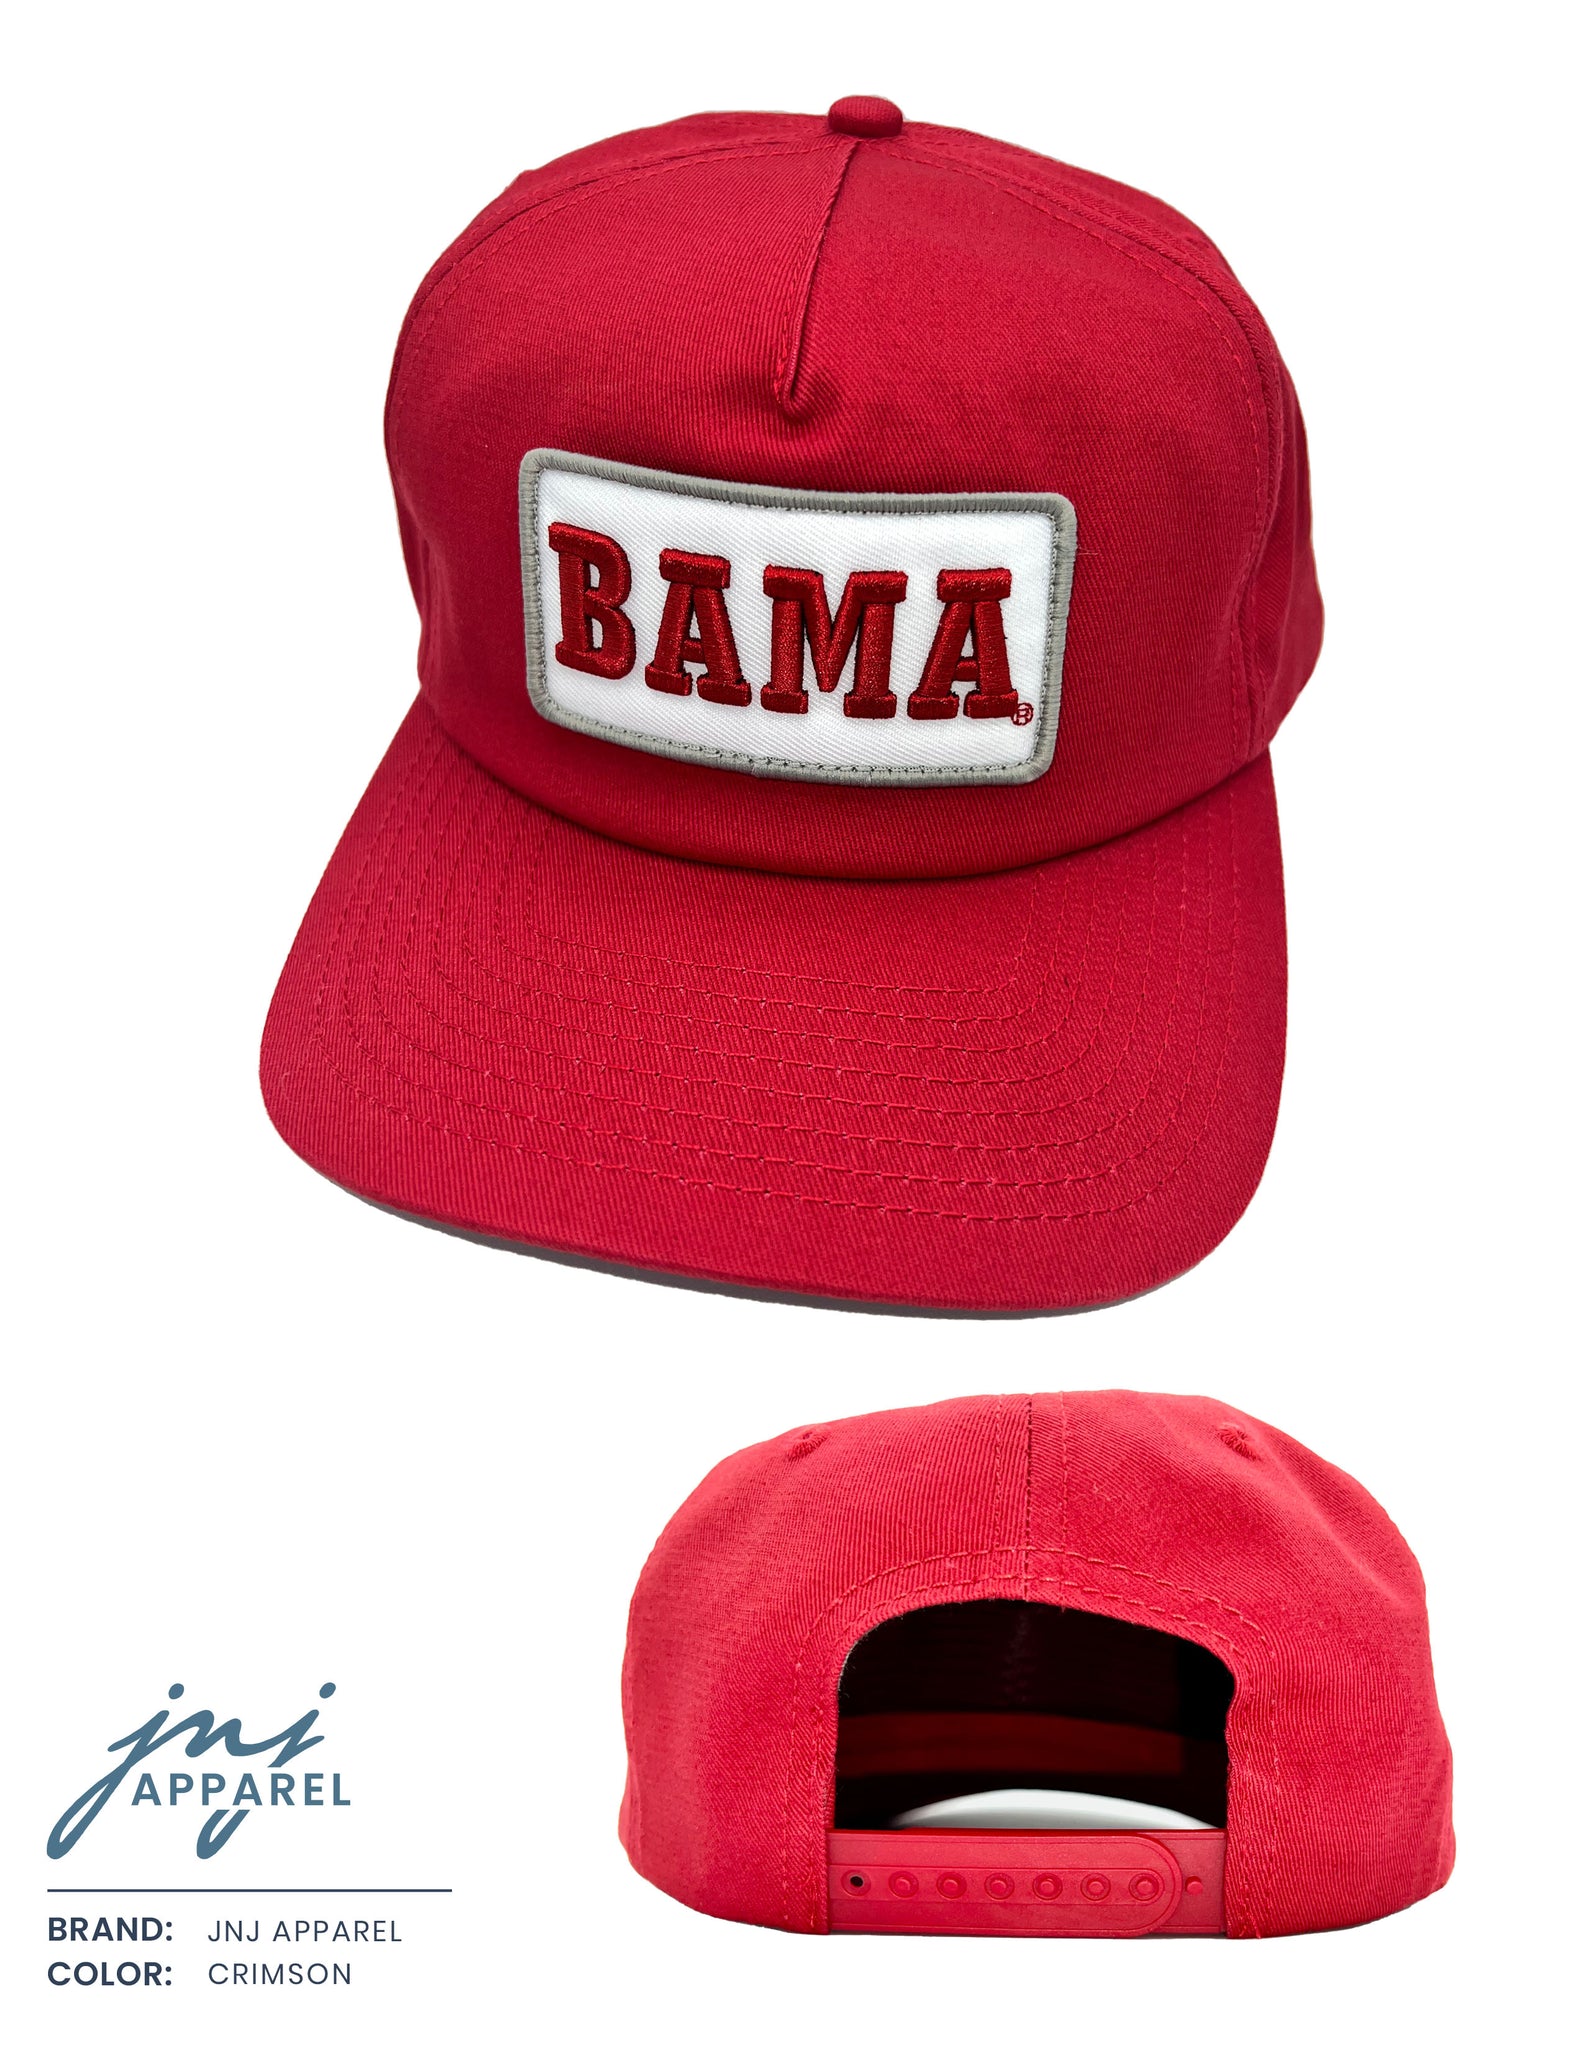 Retro Bama Patch Hat